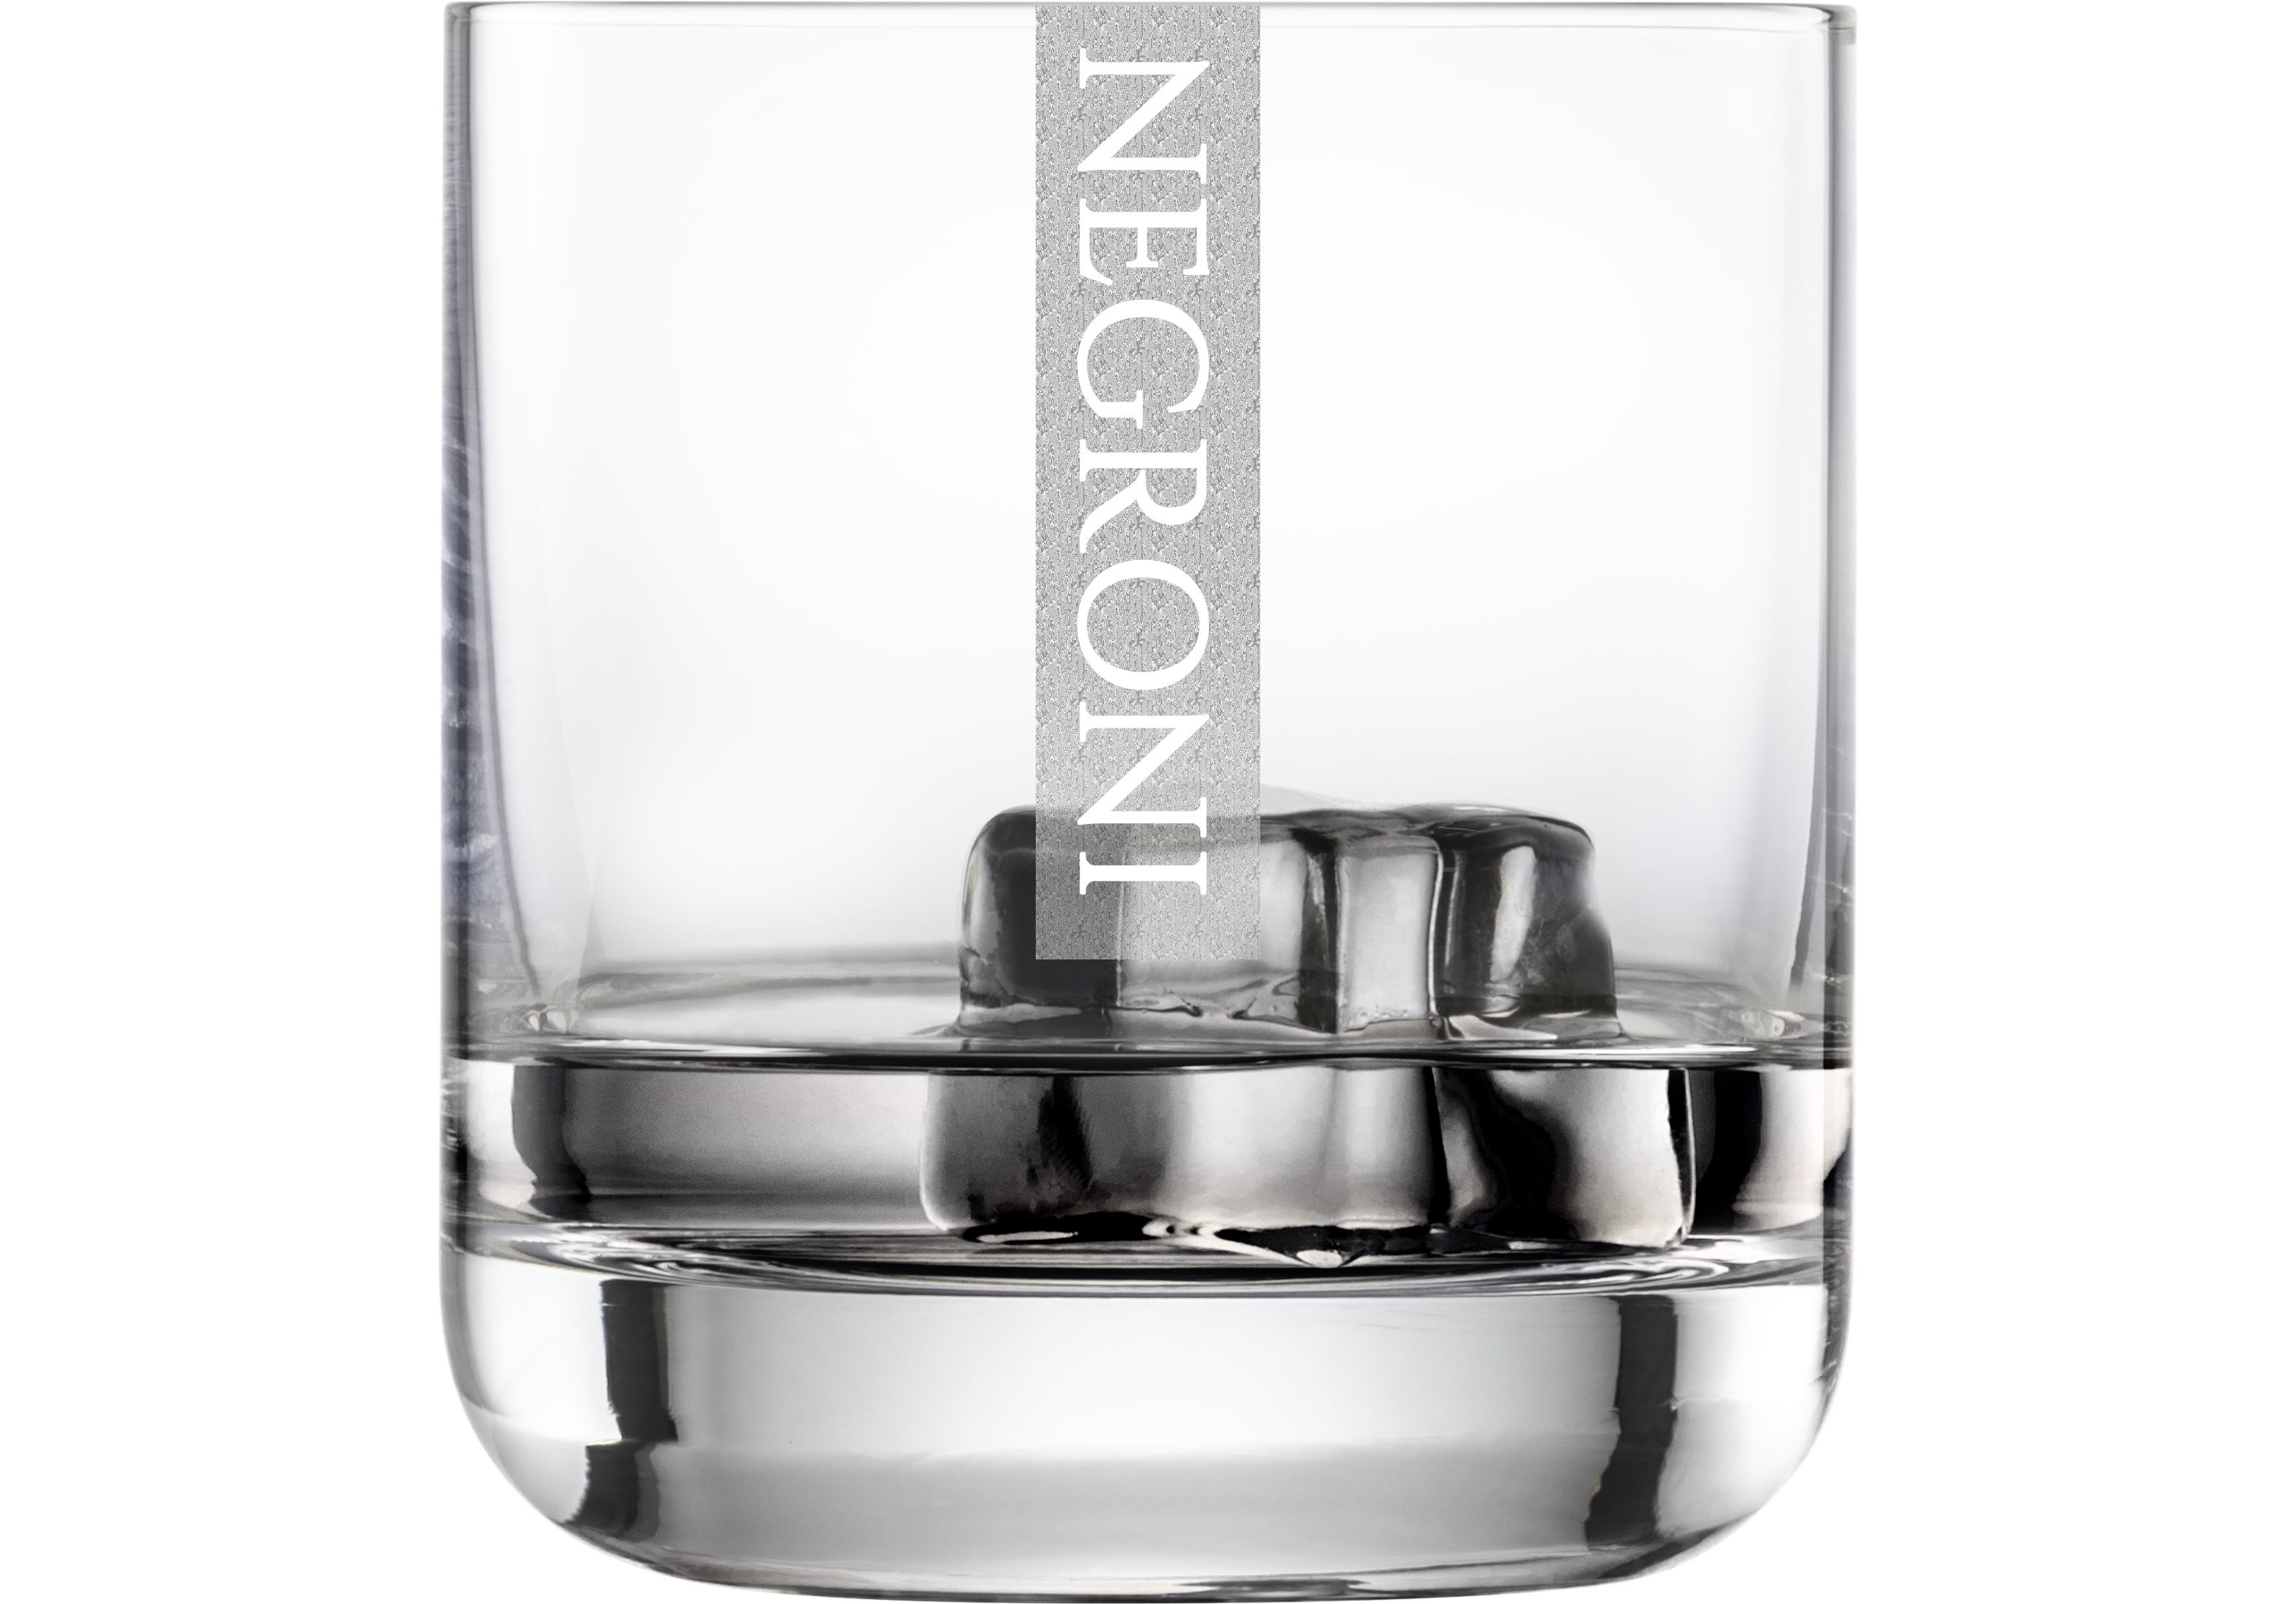 NEGRONI Gläser | 6 Stück 300ml Schott Tumblerglas | CoolGlas